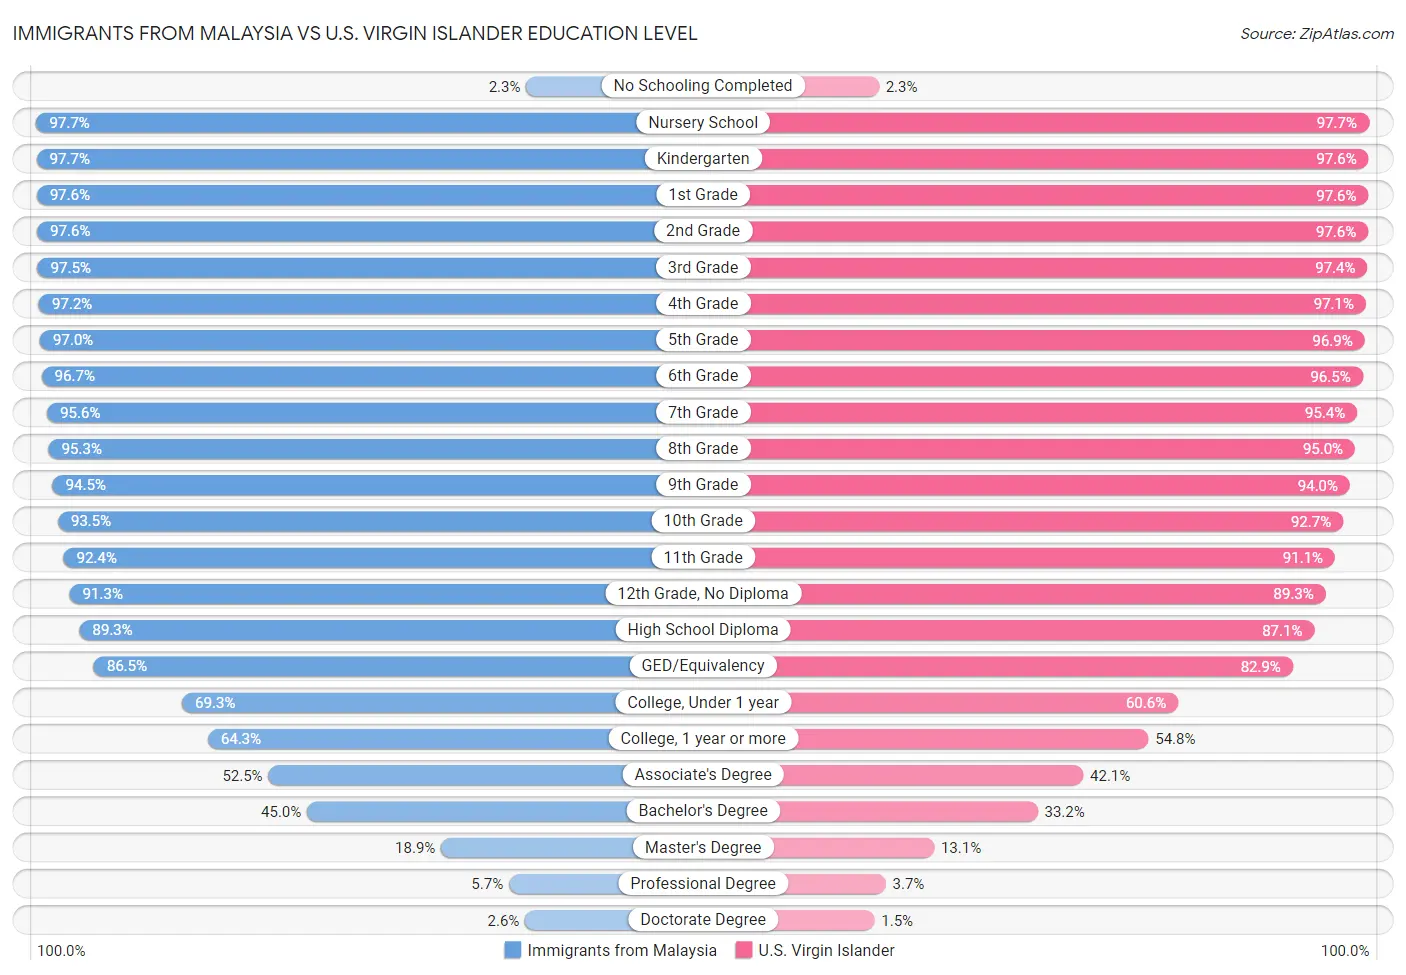 Immigrants from Malaysia vs U.S. Virgin Islander Education Level